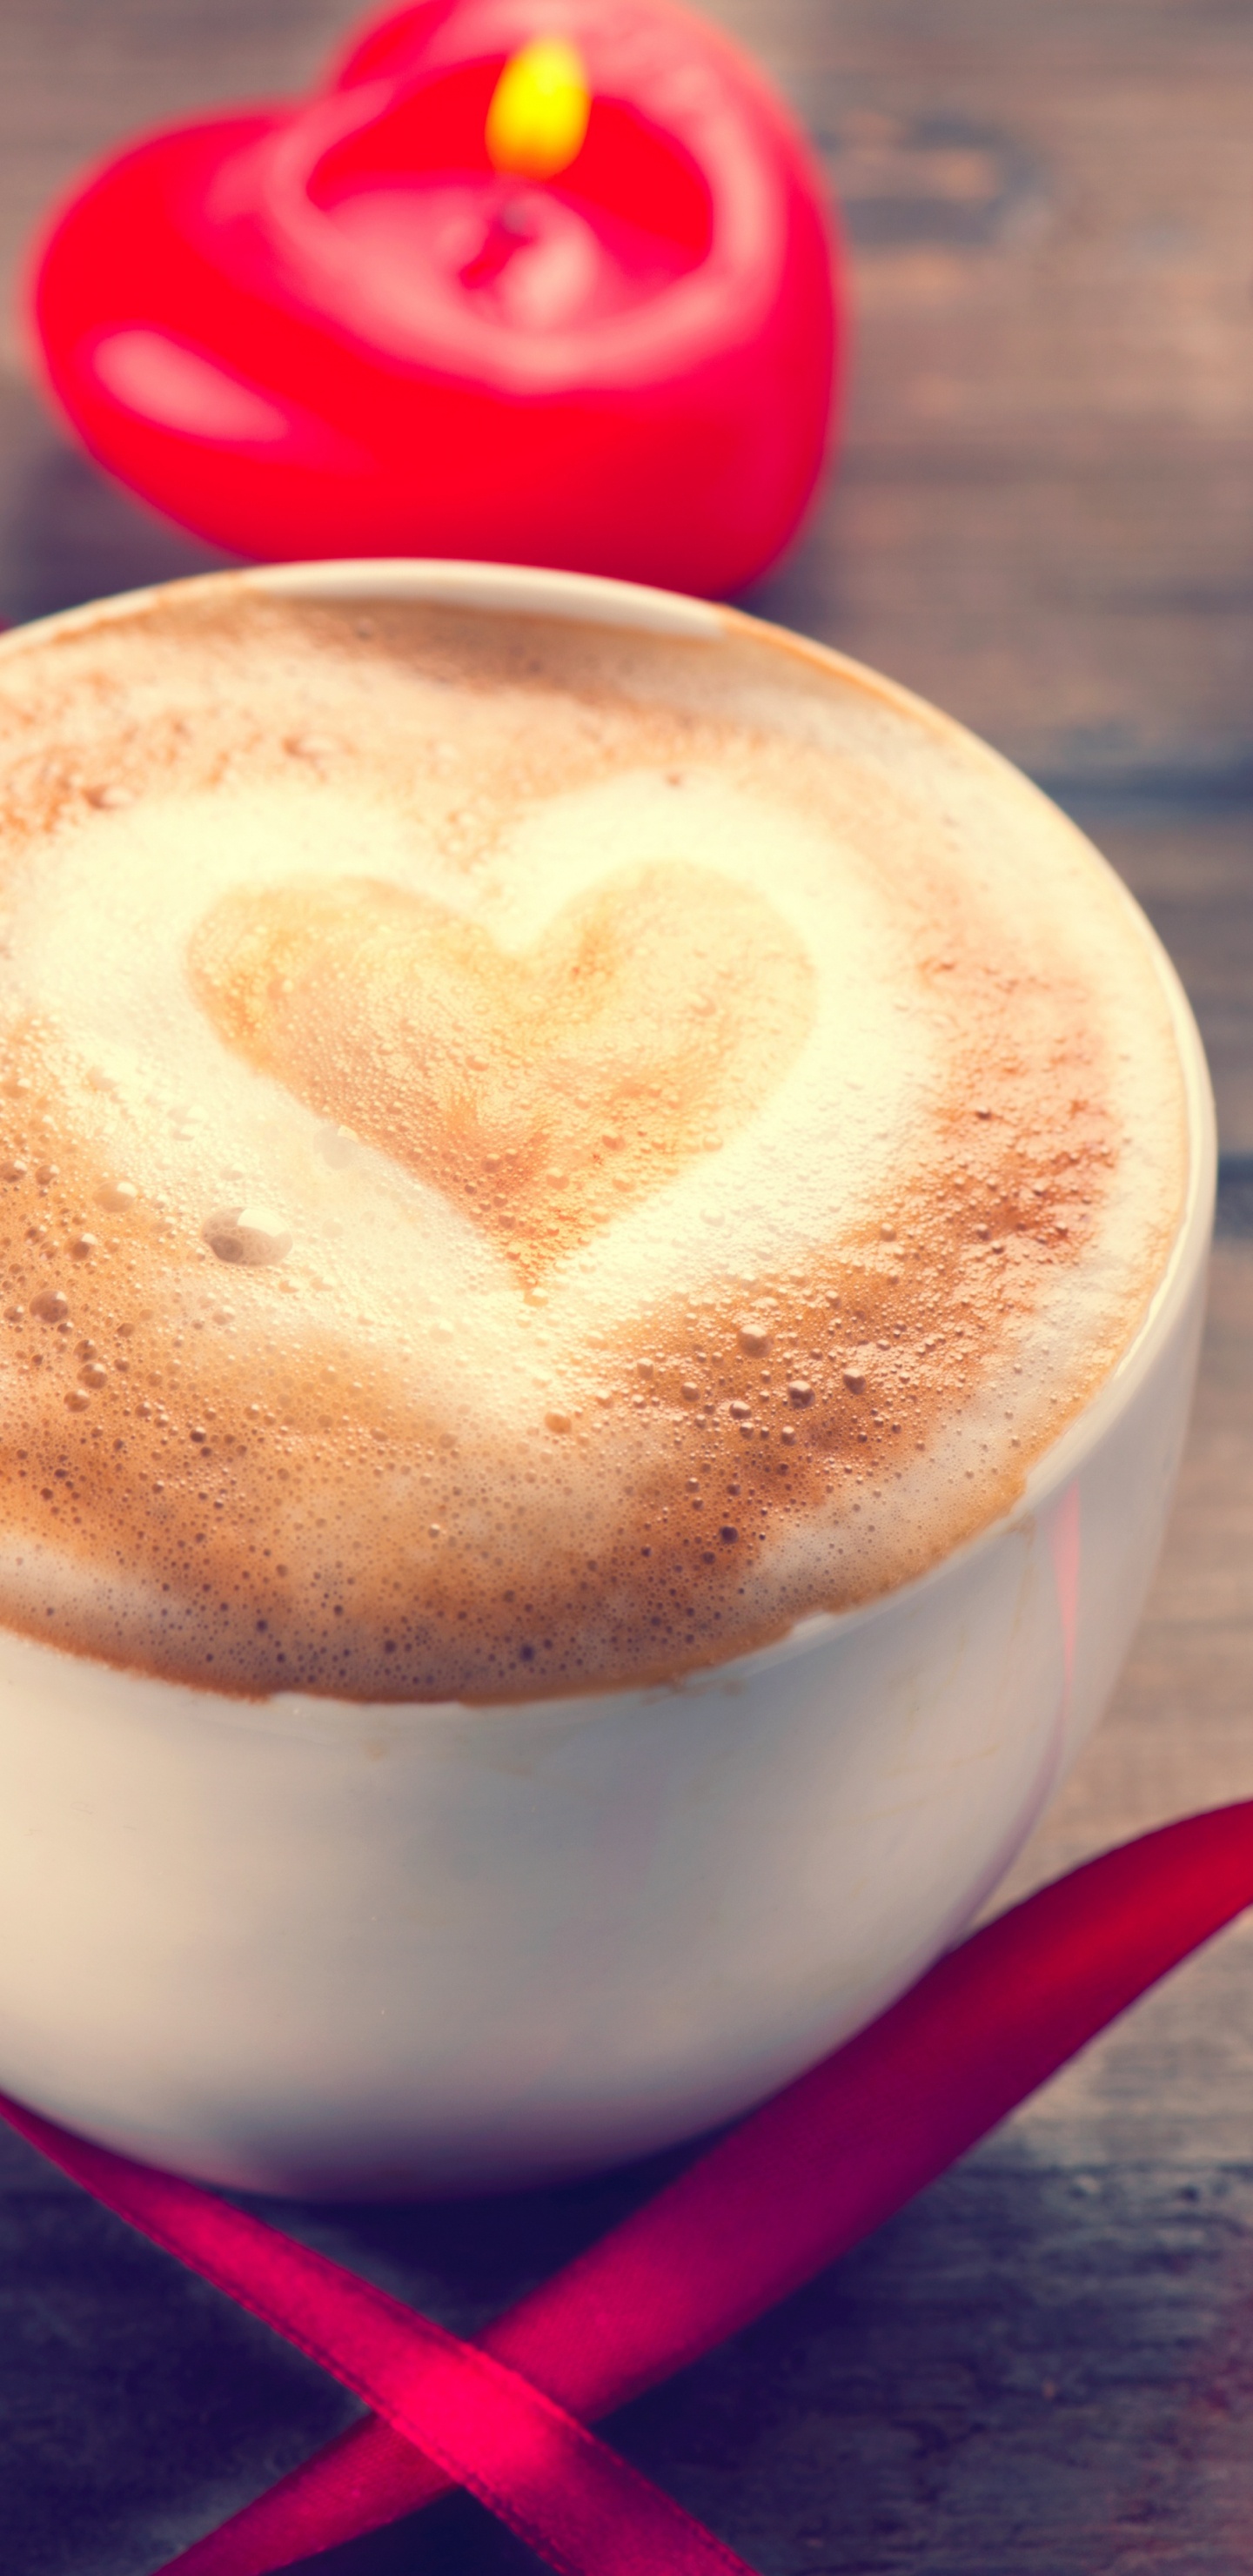 Kaffee, Cappuccino, Latte, Kaffeetasse, Cup. Wallpaper in 1440x2960 Resolution